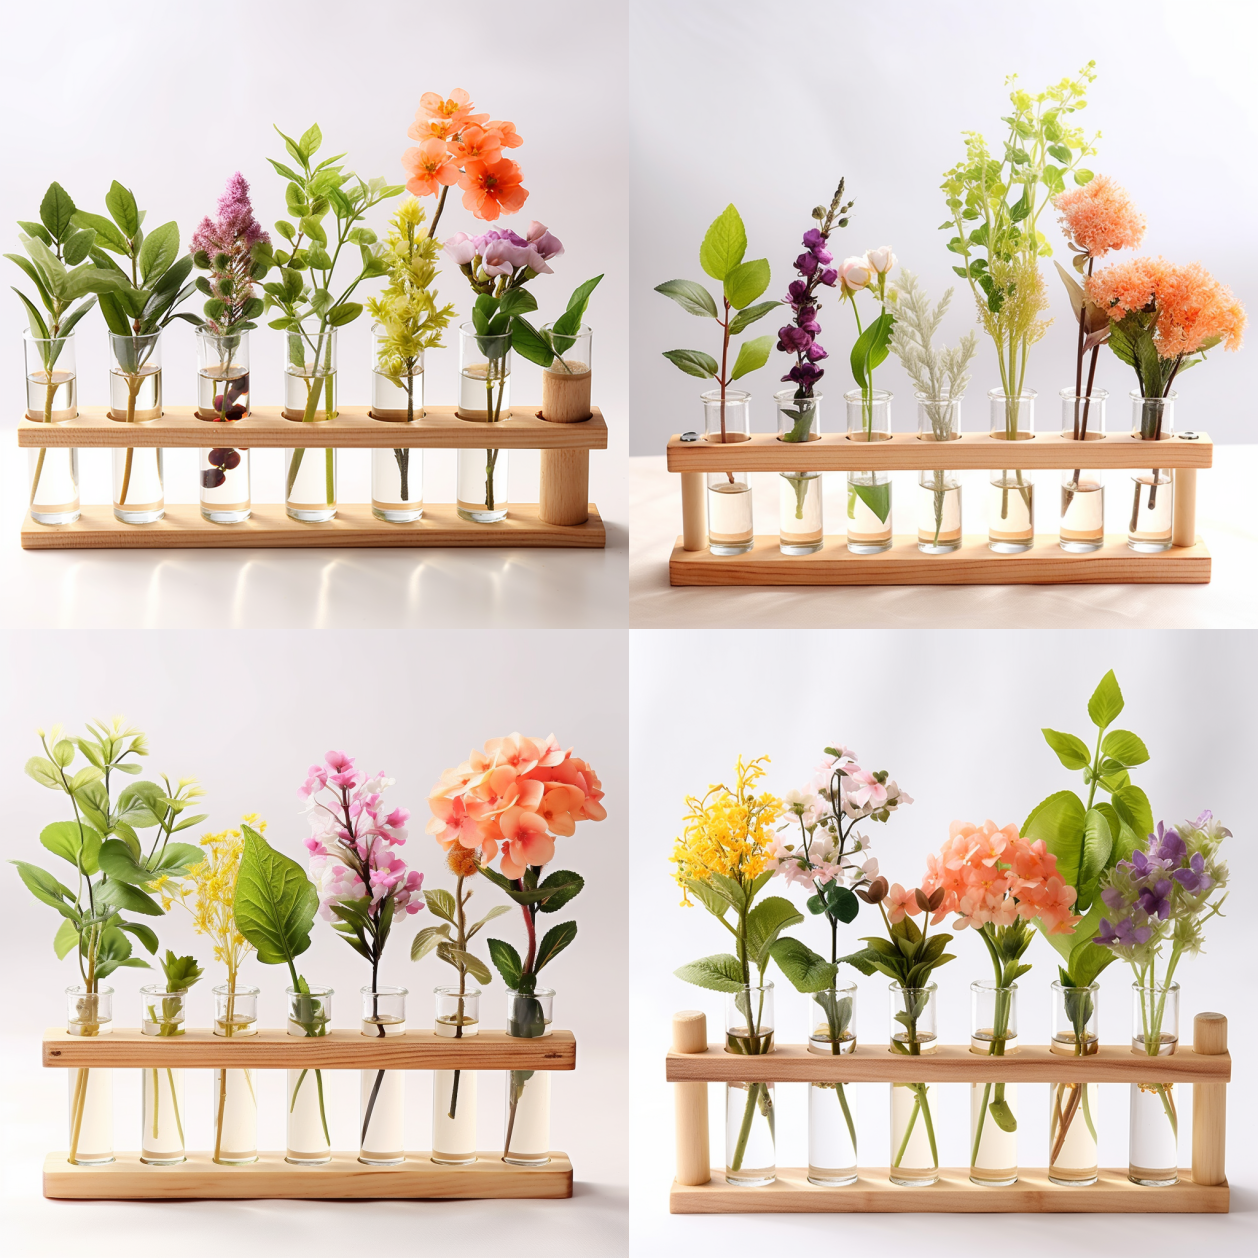 Test Tube Vase Flower Pot Propagation Station - Ideal for Parties, Desktops, and Weddings